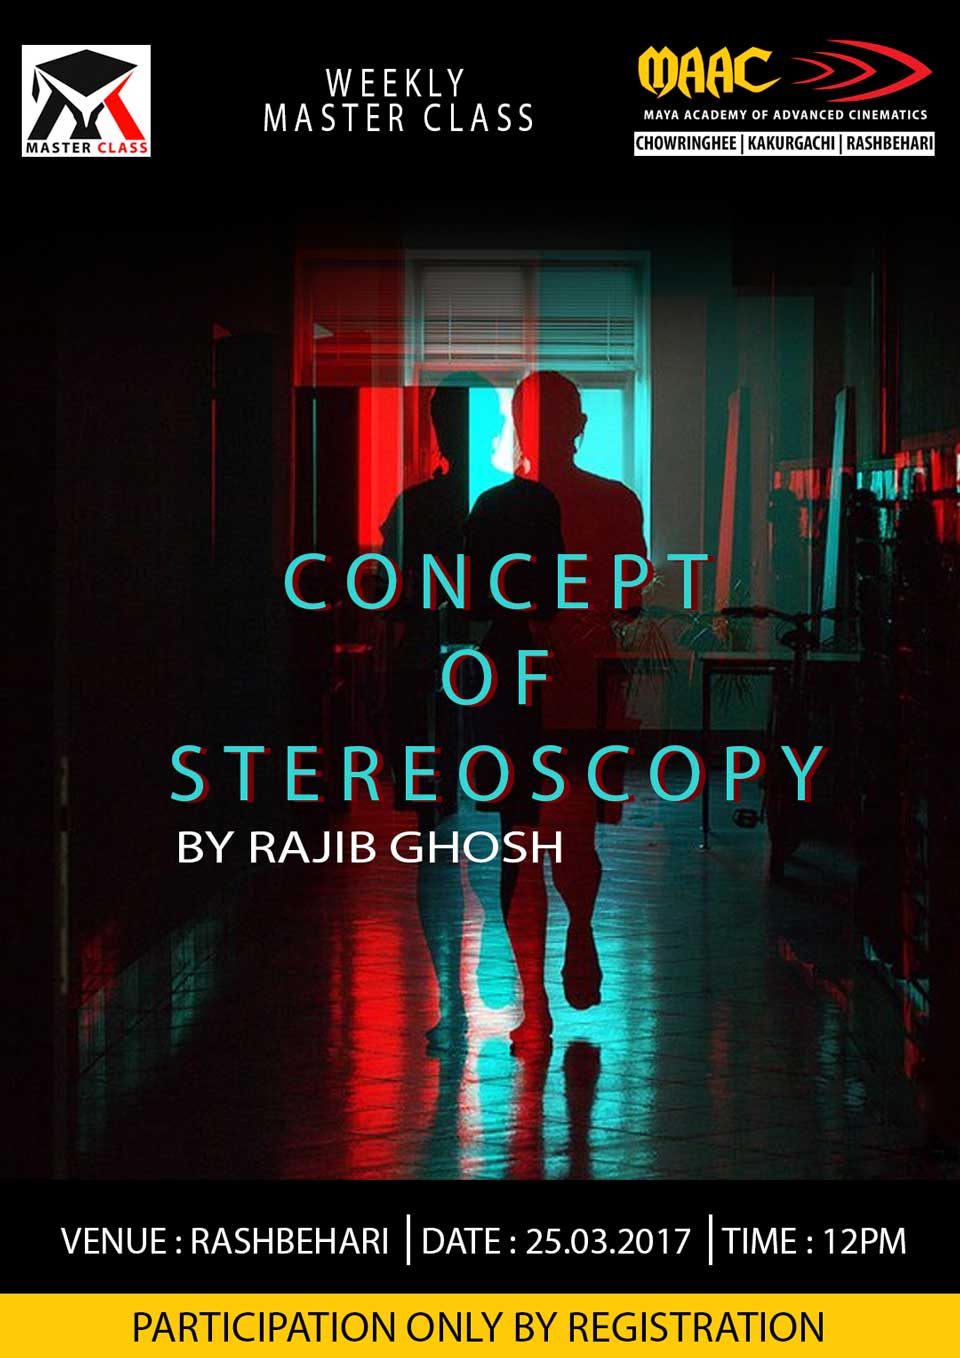 Weekly Master Class on Concept of Stereoscopy - Rajib Ghosh